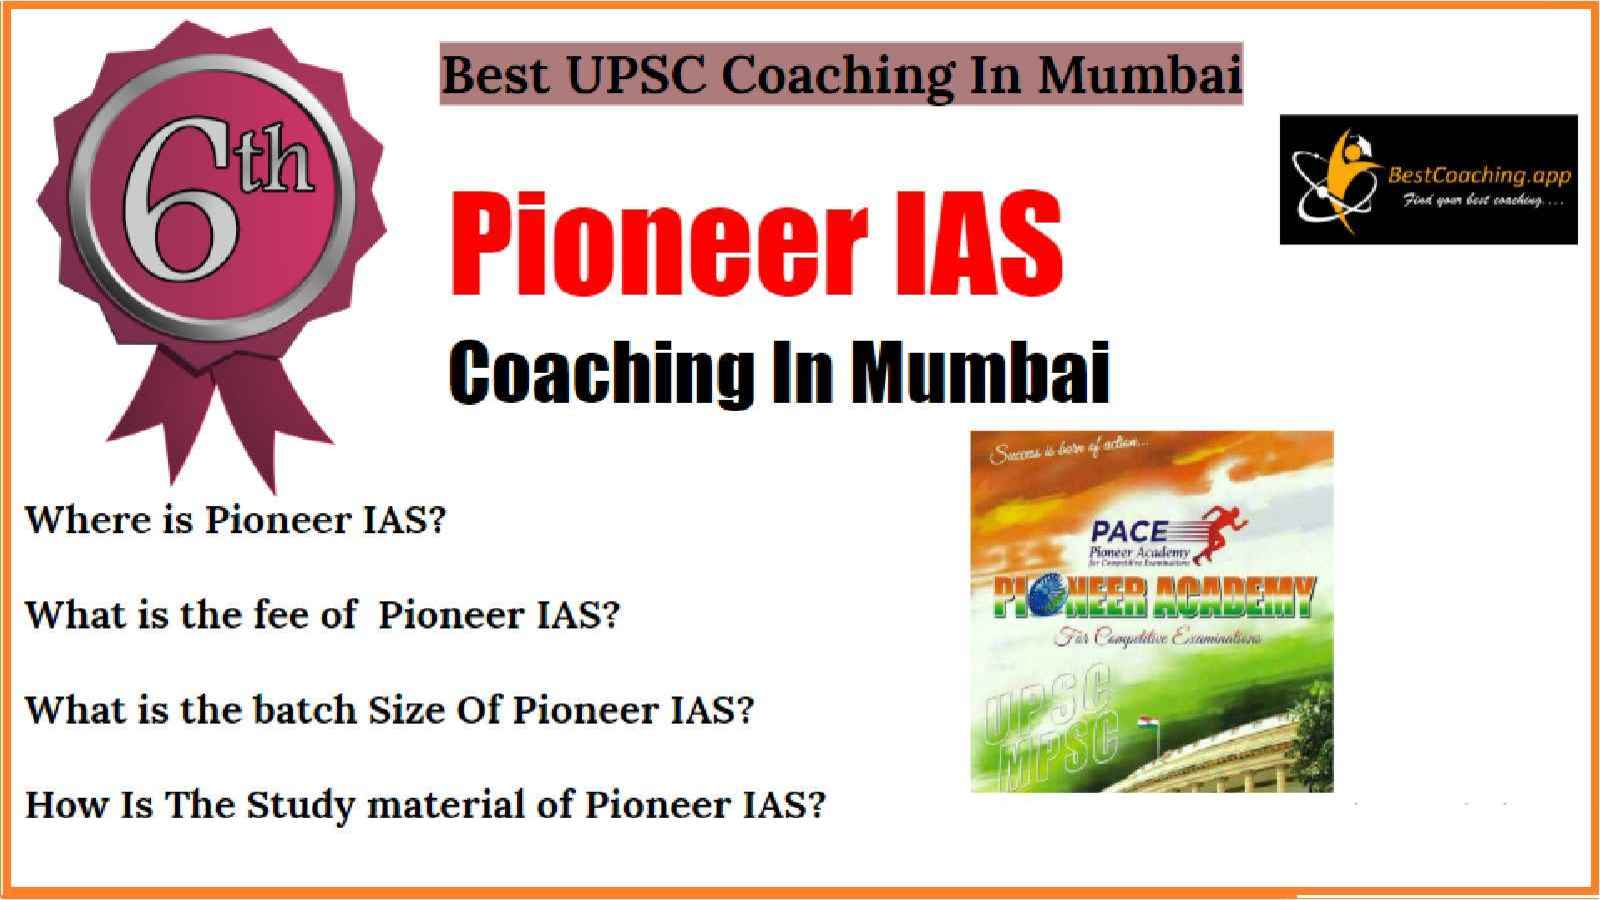 Rank 6th UPSC Coaching In Mumbai